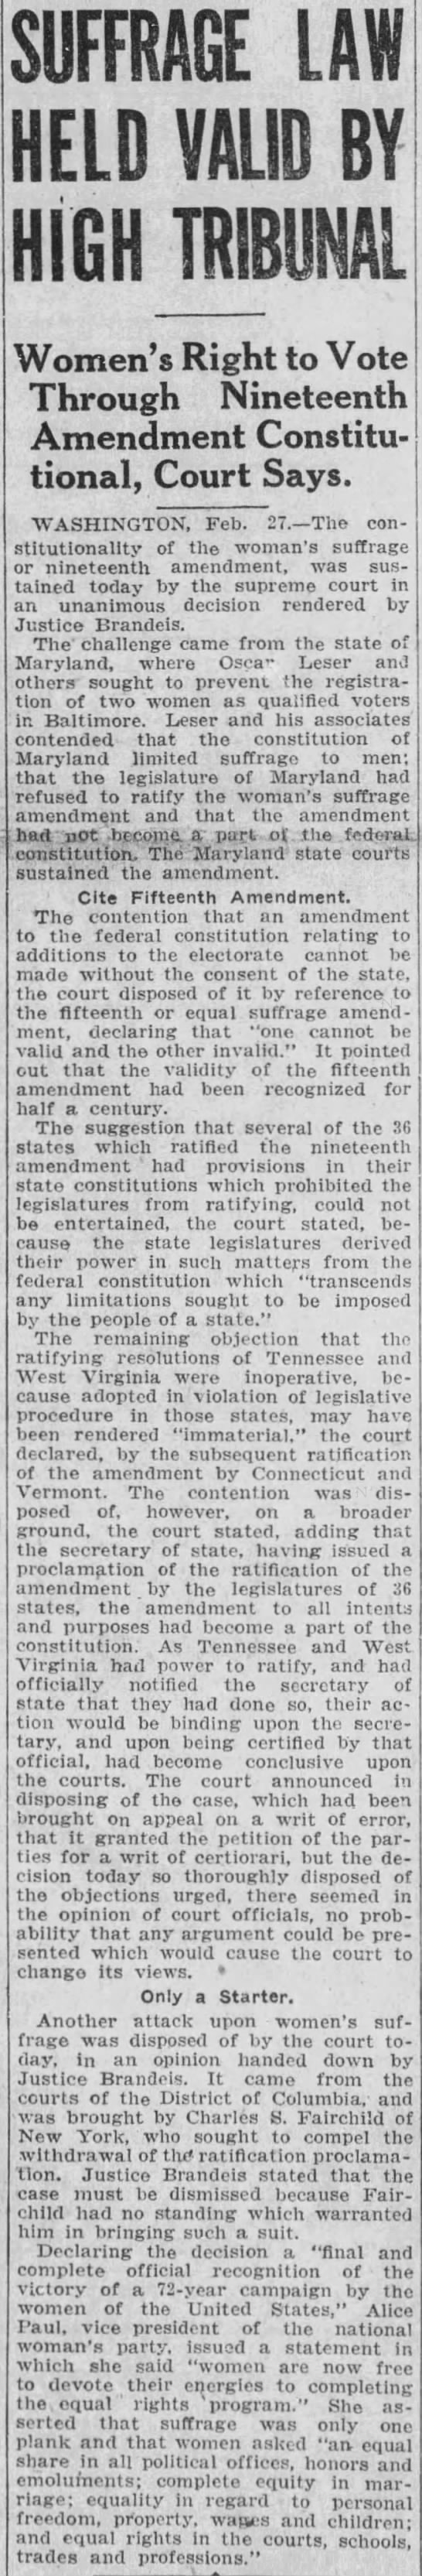 U.S. Supreme Court unanimously supports legality of 19th Amendment, 1922 - 